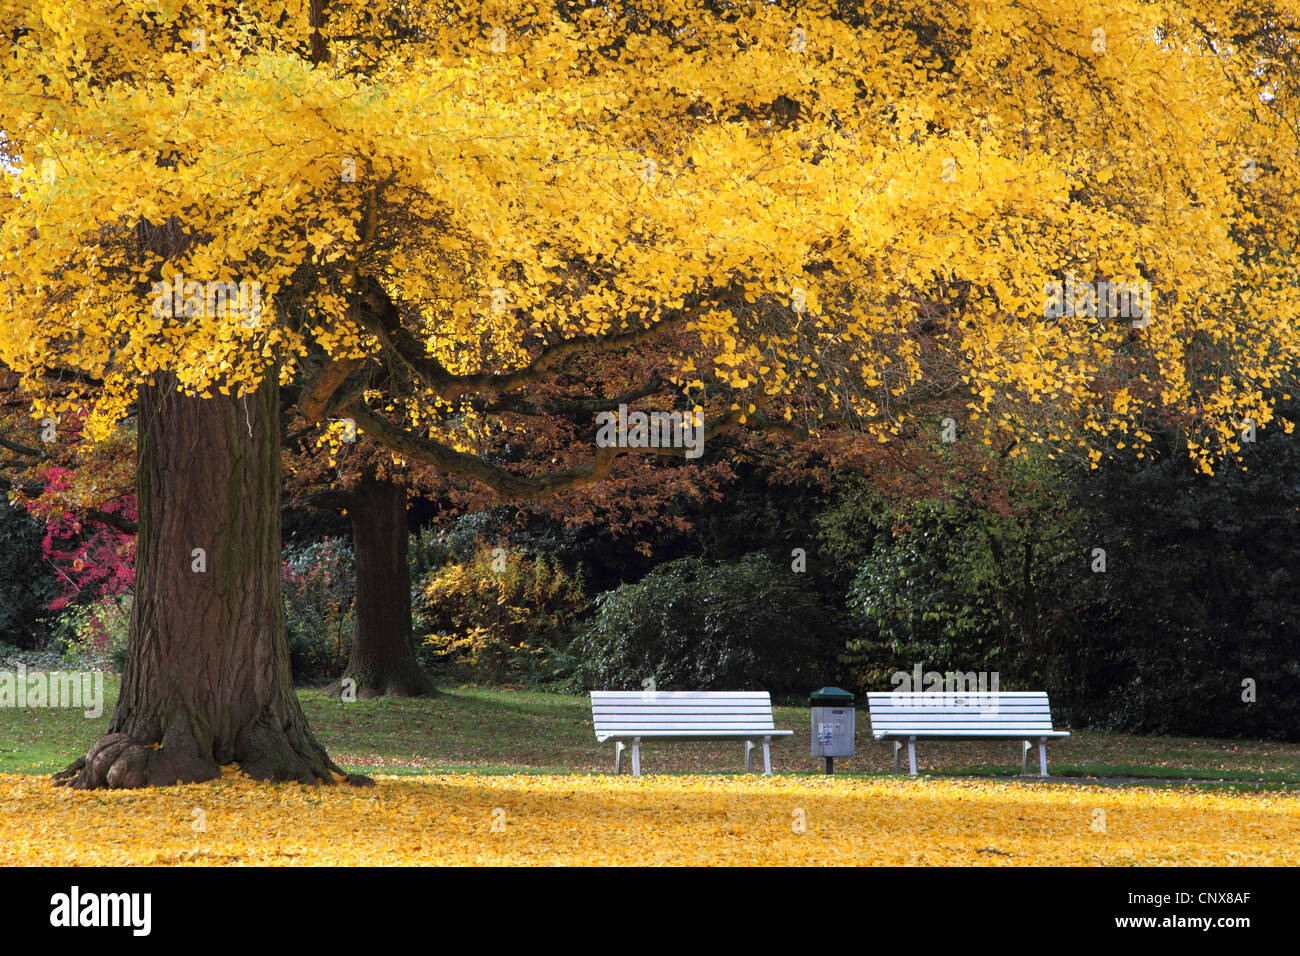 maidenhair tree, Ginkgo Tree, Gingko Tree, Ginko Tree (Ginkgo biloba), in a park in autumn with benches Stock Photo